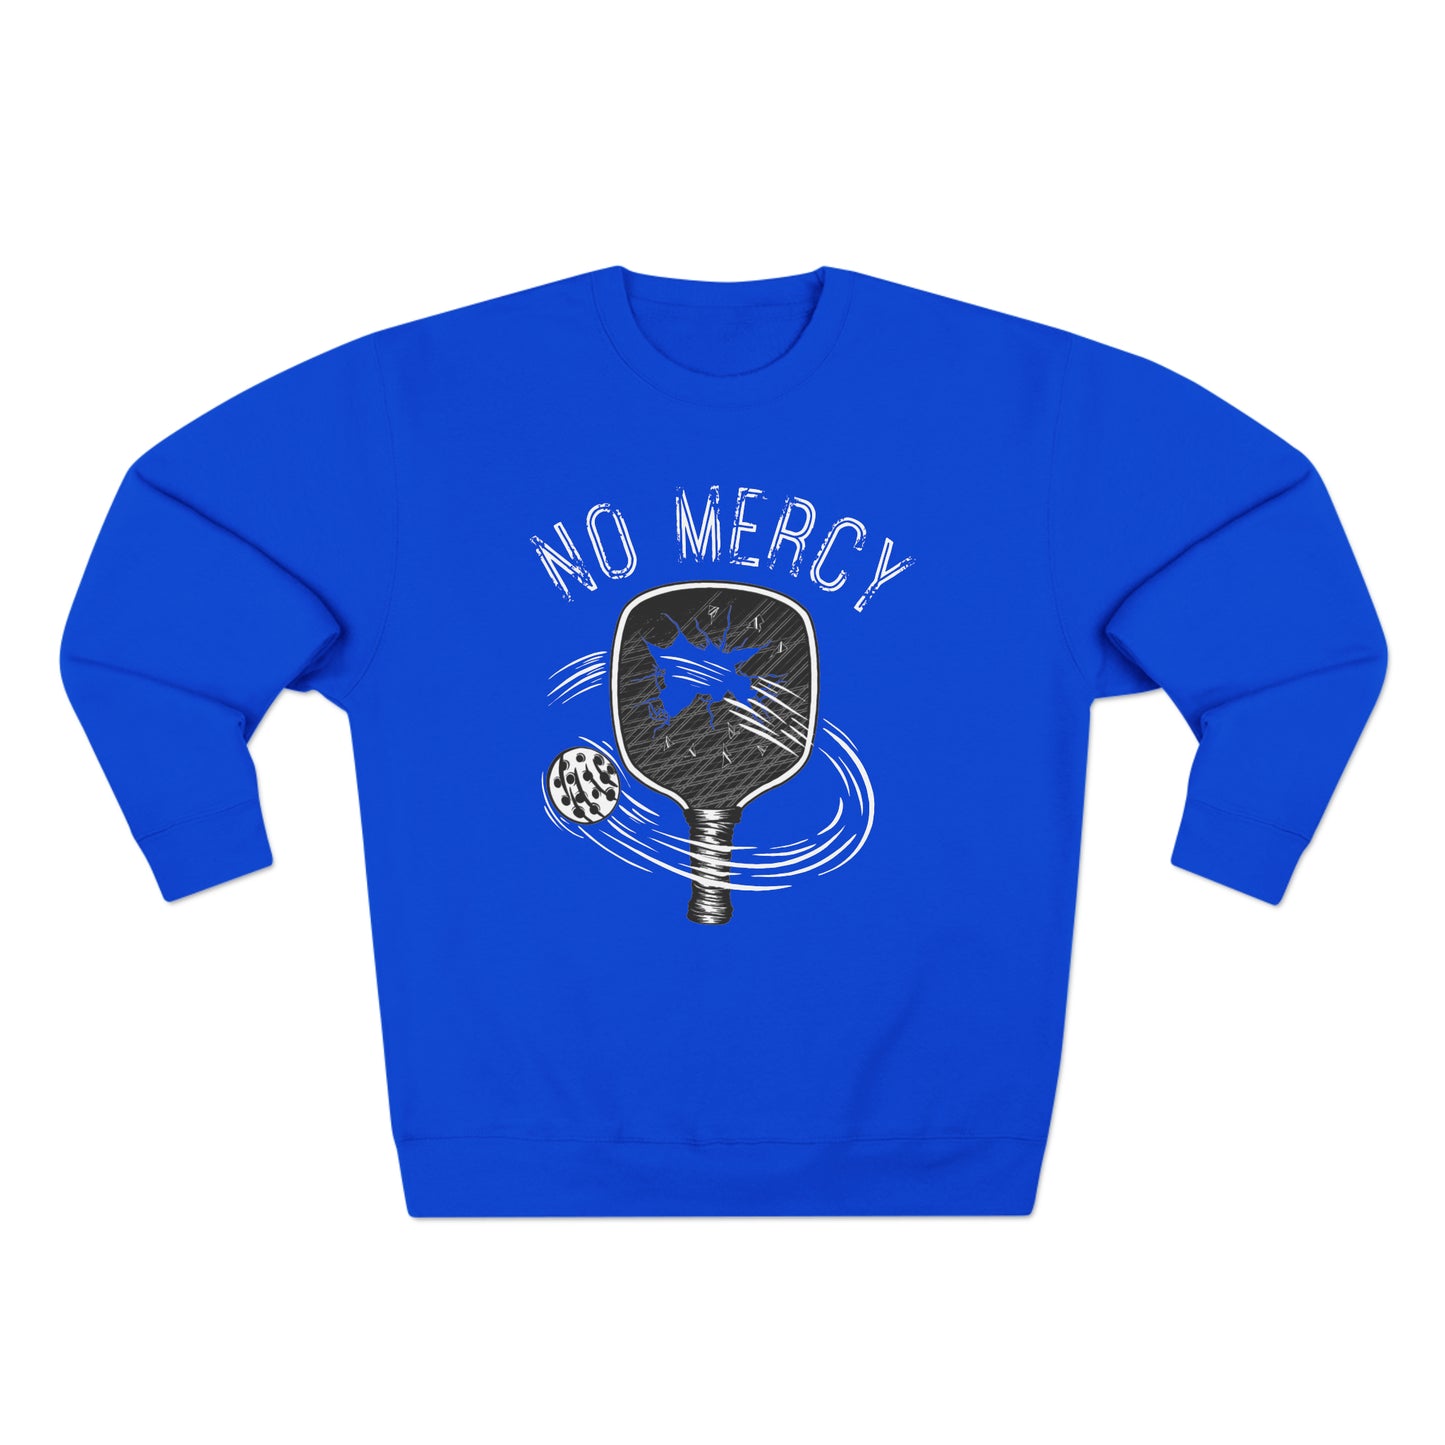 No Mercy Pickleball Series - Unisex Crewneck Sweatshirt